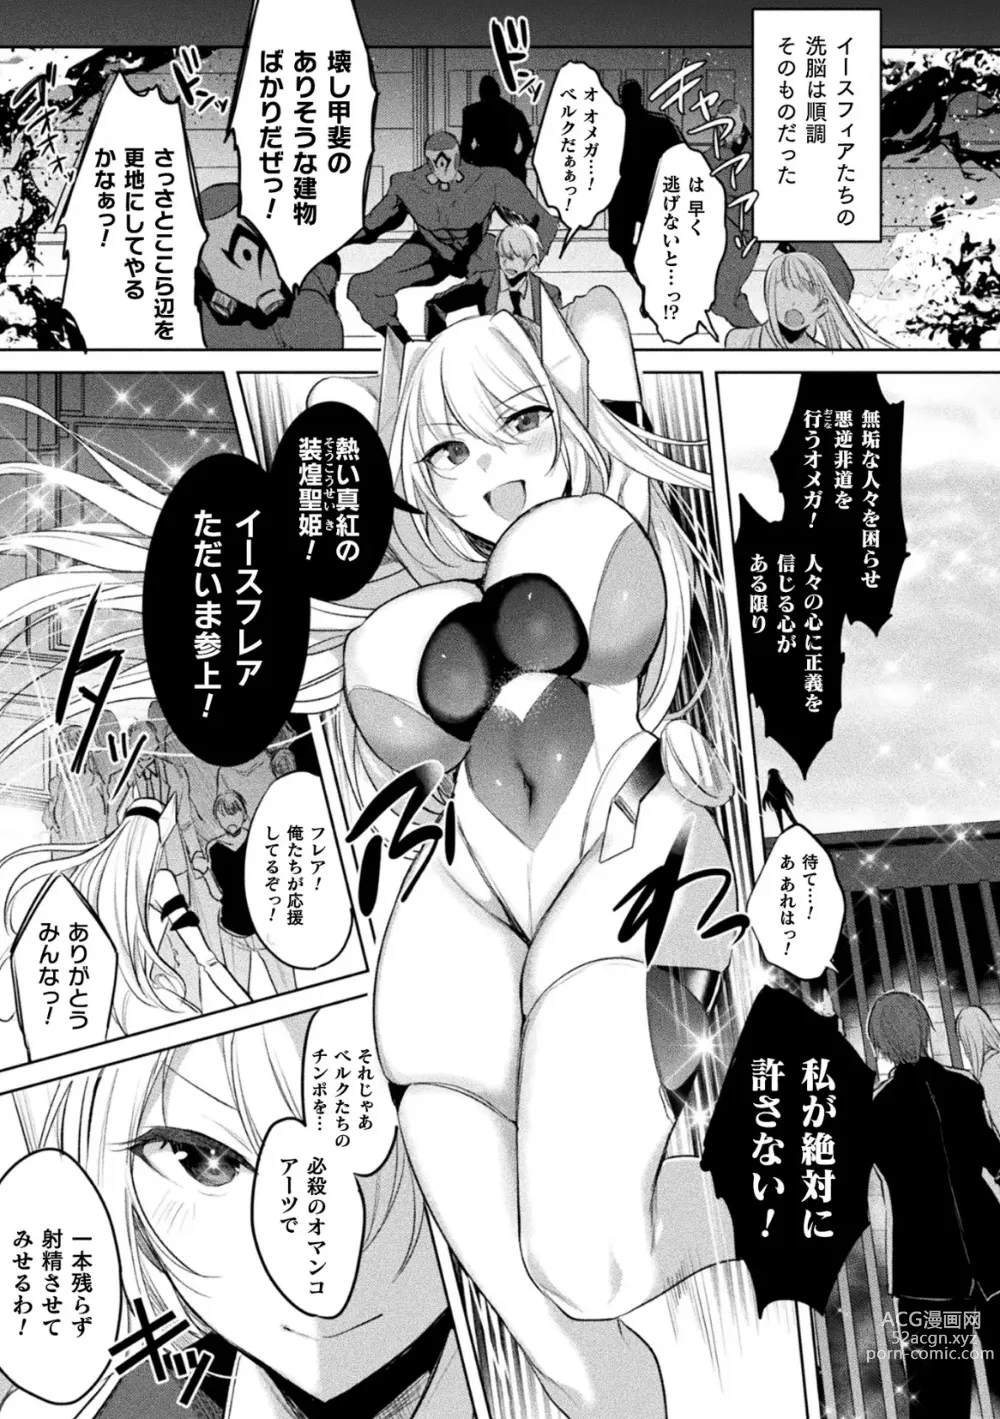 Page 7 of manga Kukkoro Heroines Vol. 35